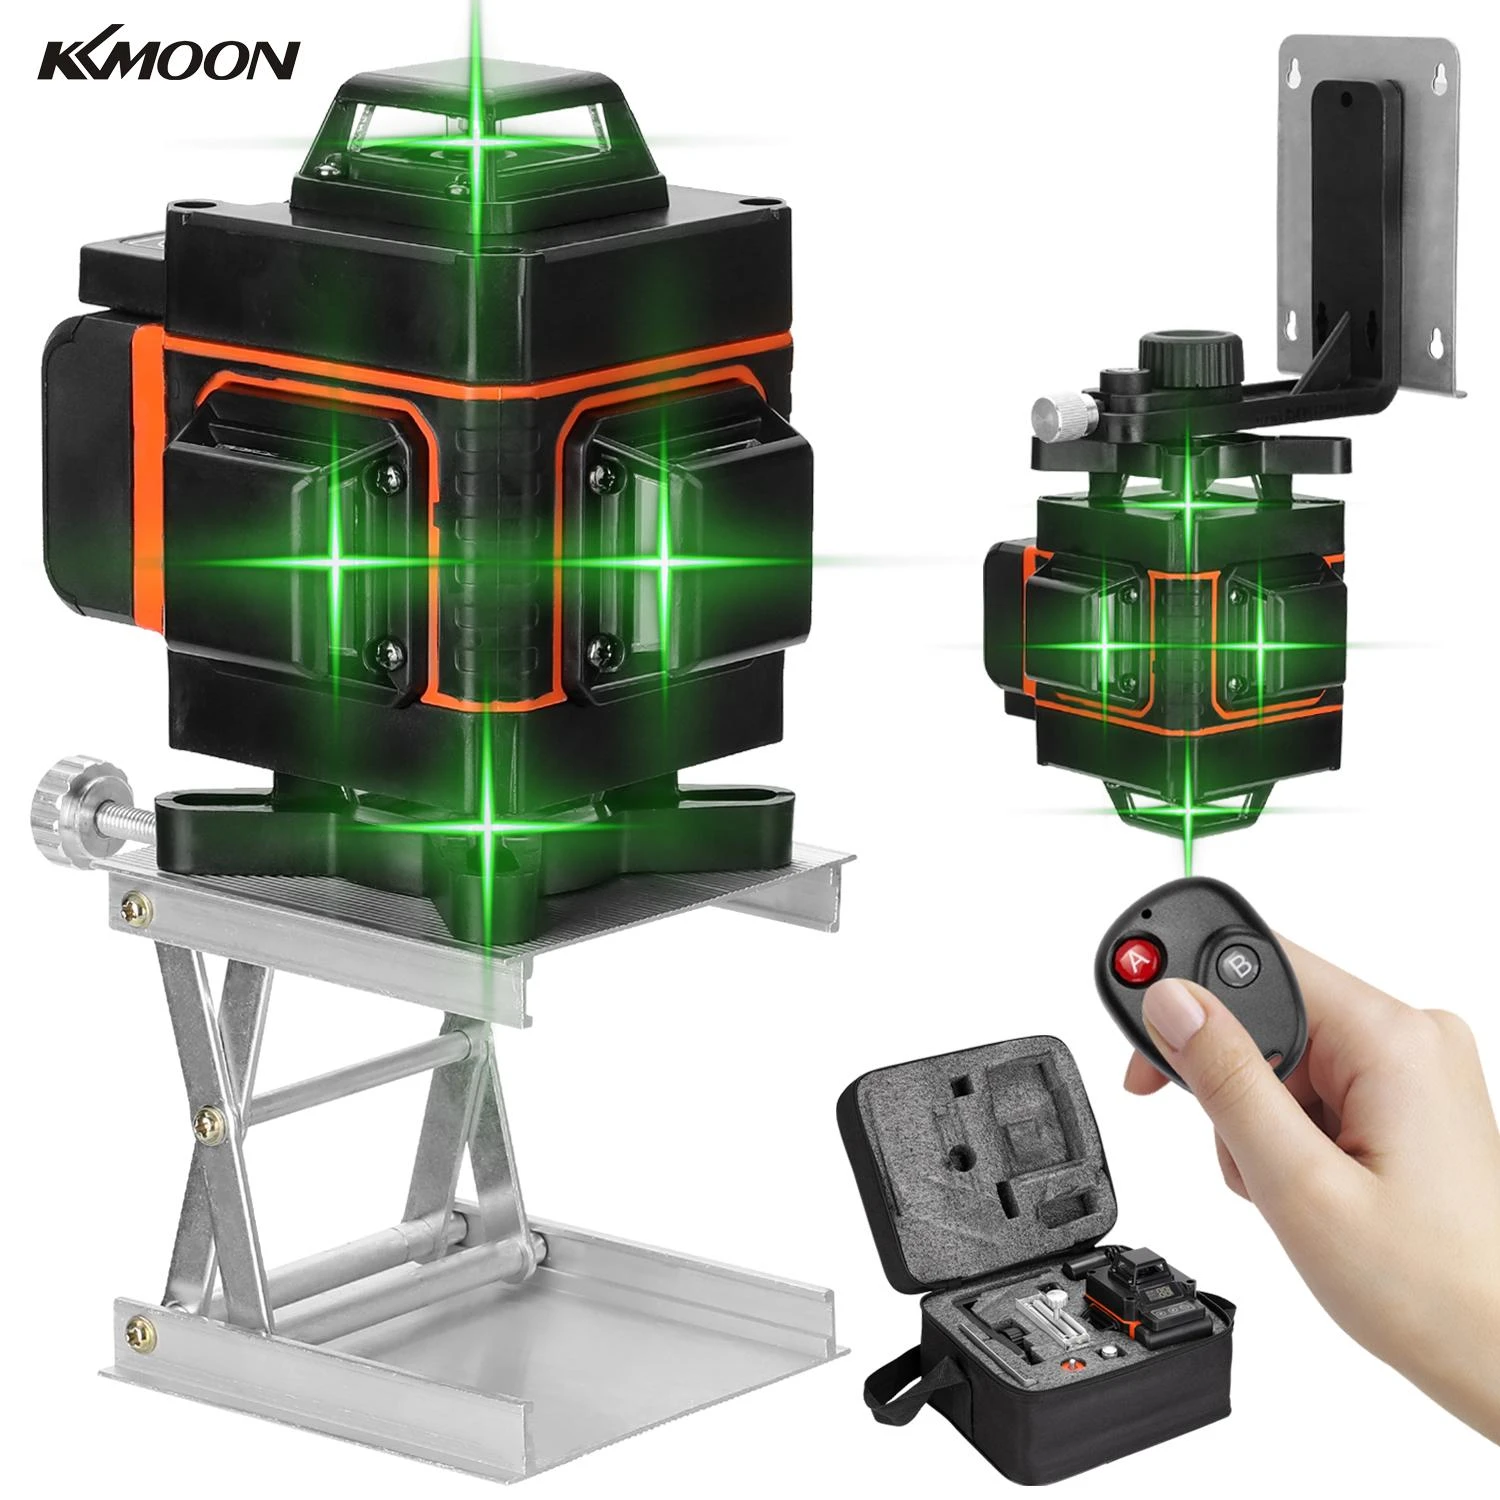 KKMOON Multifunctional 4D 16 Lines Green Laser Level Instrument Portable Vertical Horizontal Line Self-Leveling Laser Level 360